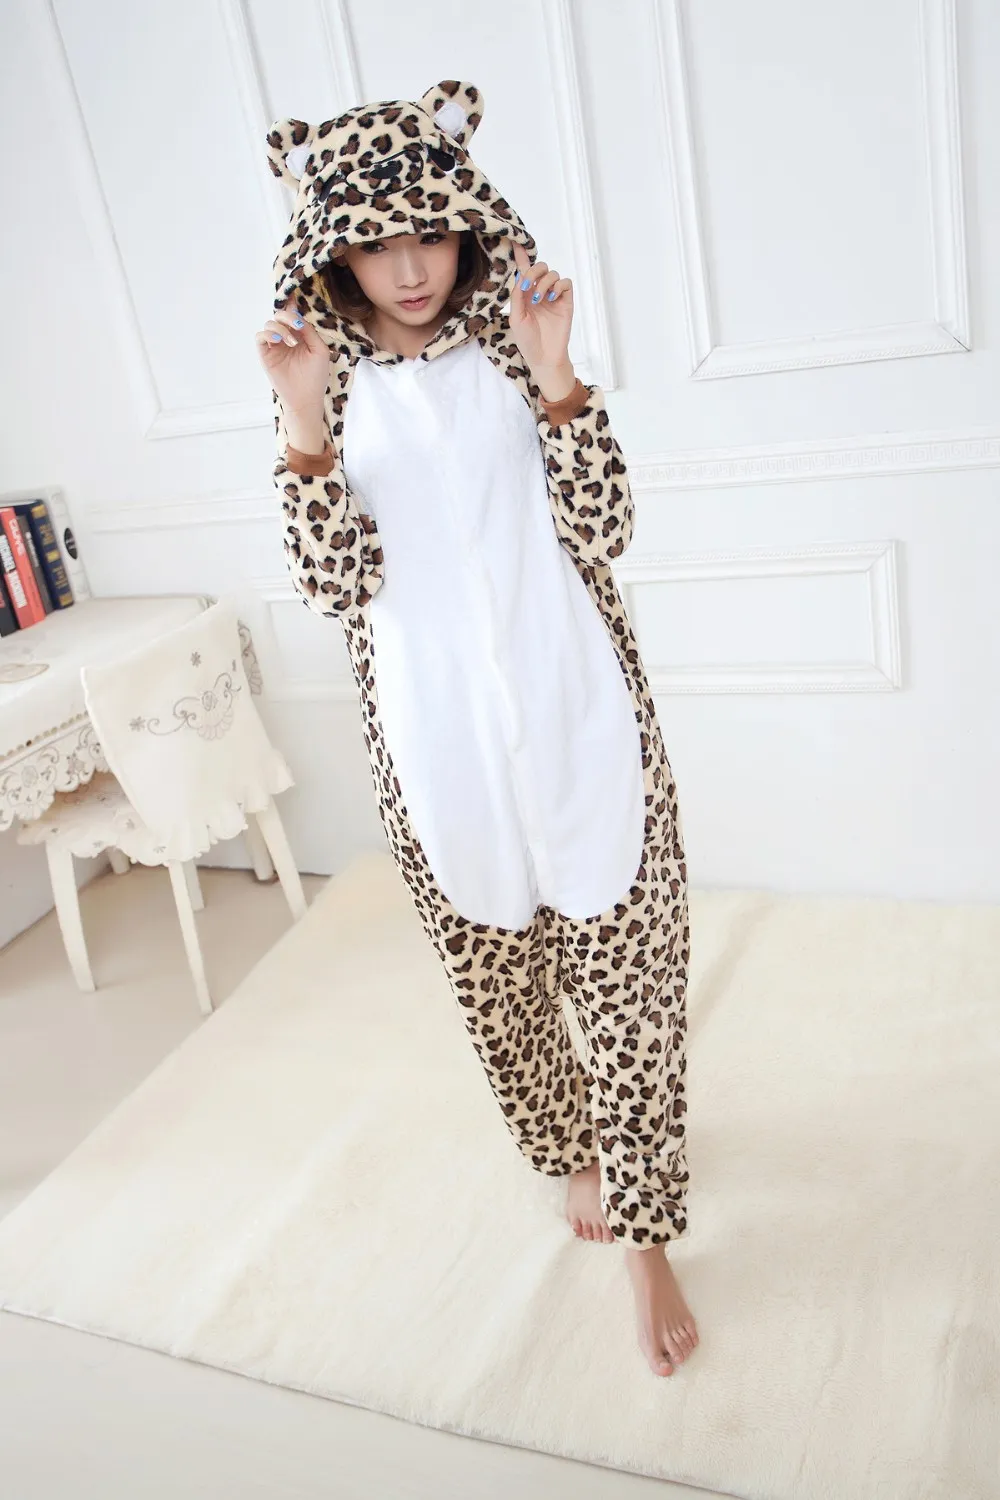 Leopardo Urso Onesies Adultos Unisex Animal Pijamas de Flanela Com Capuz Cosplay macacão Panda Pijamas Sleepwear Casa roupas macacão